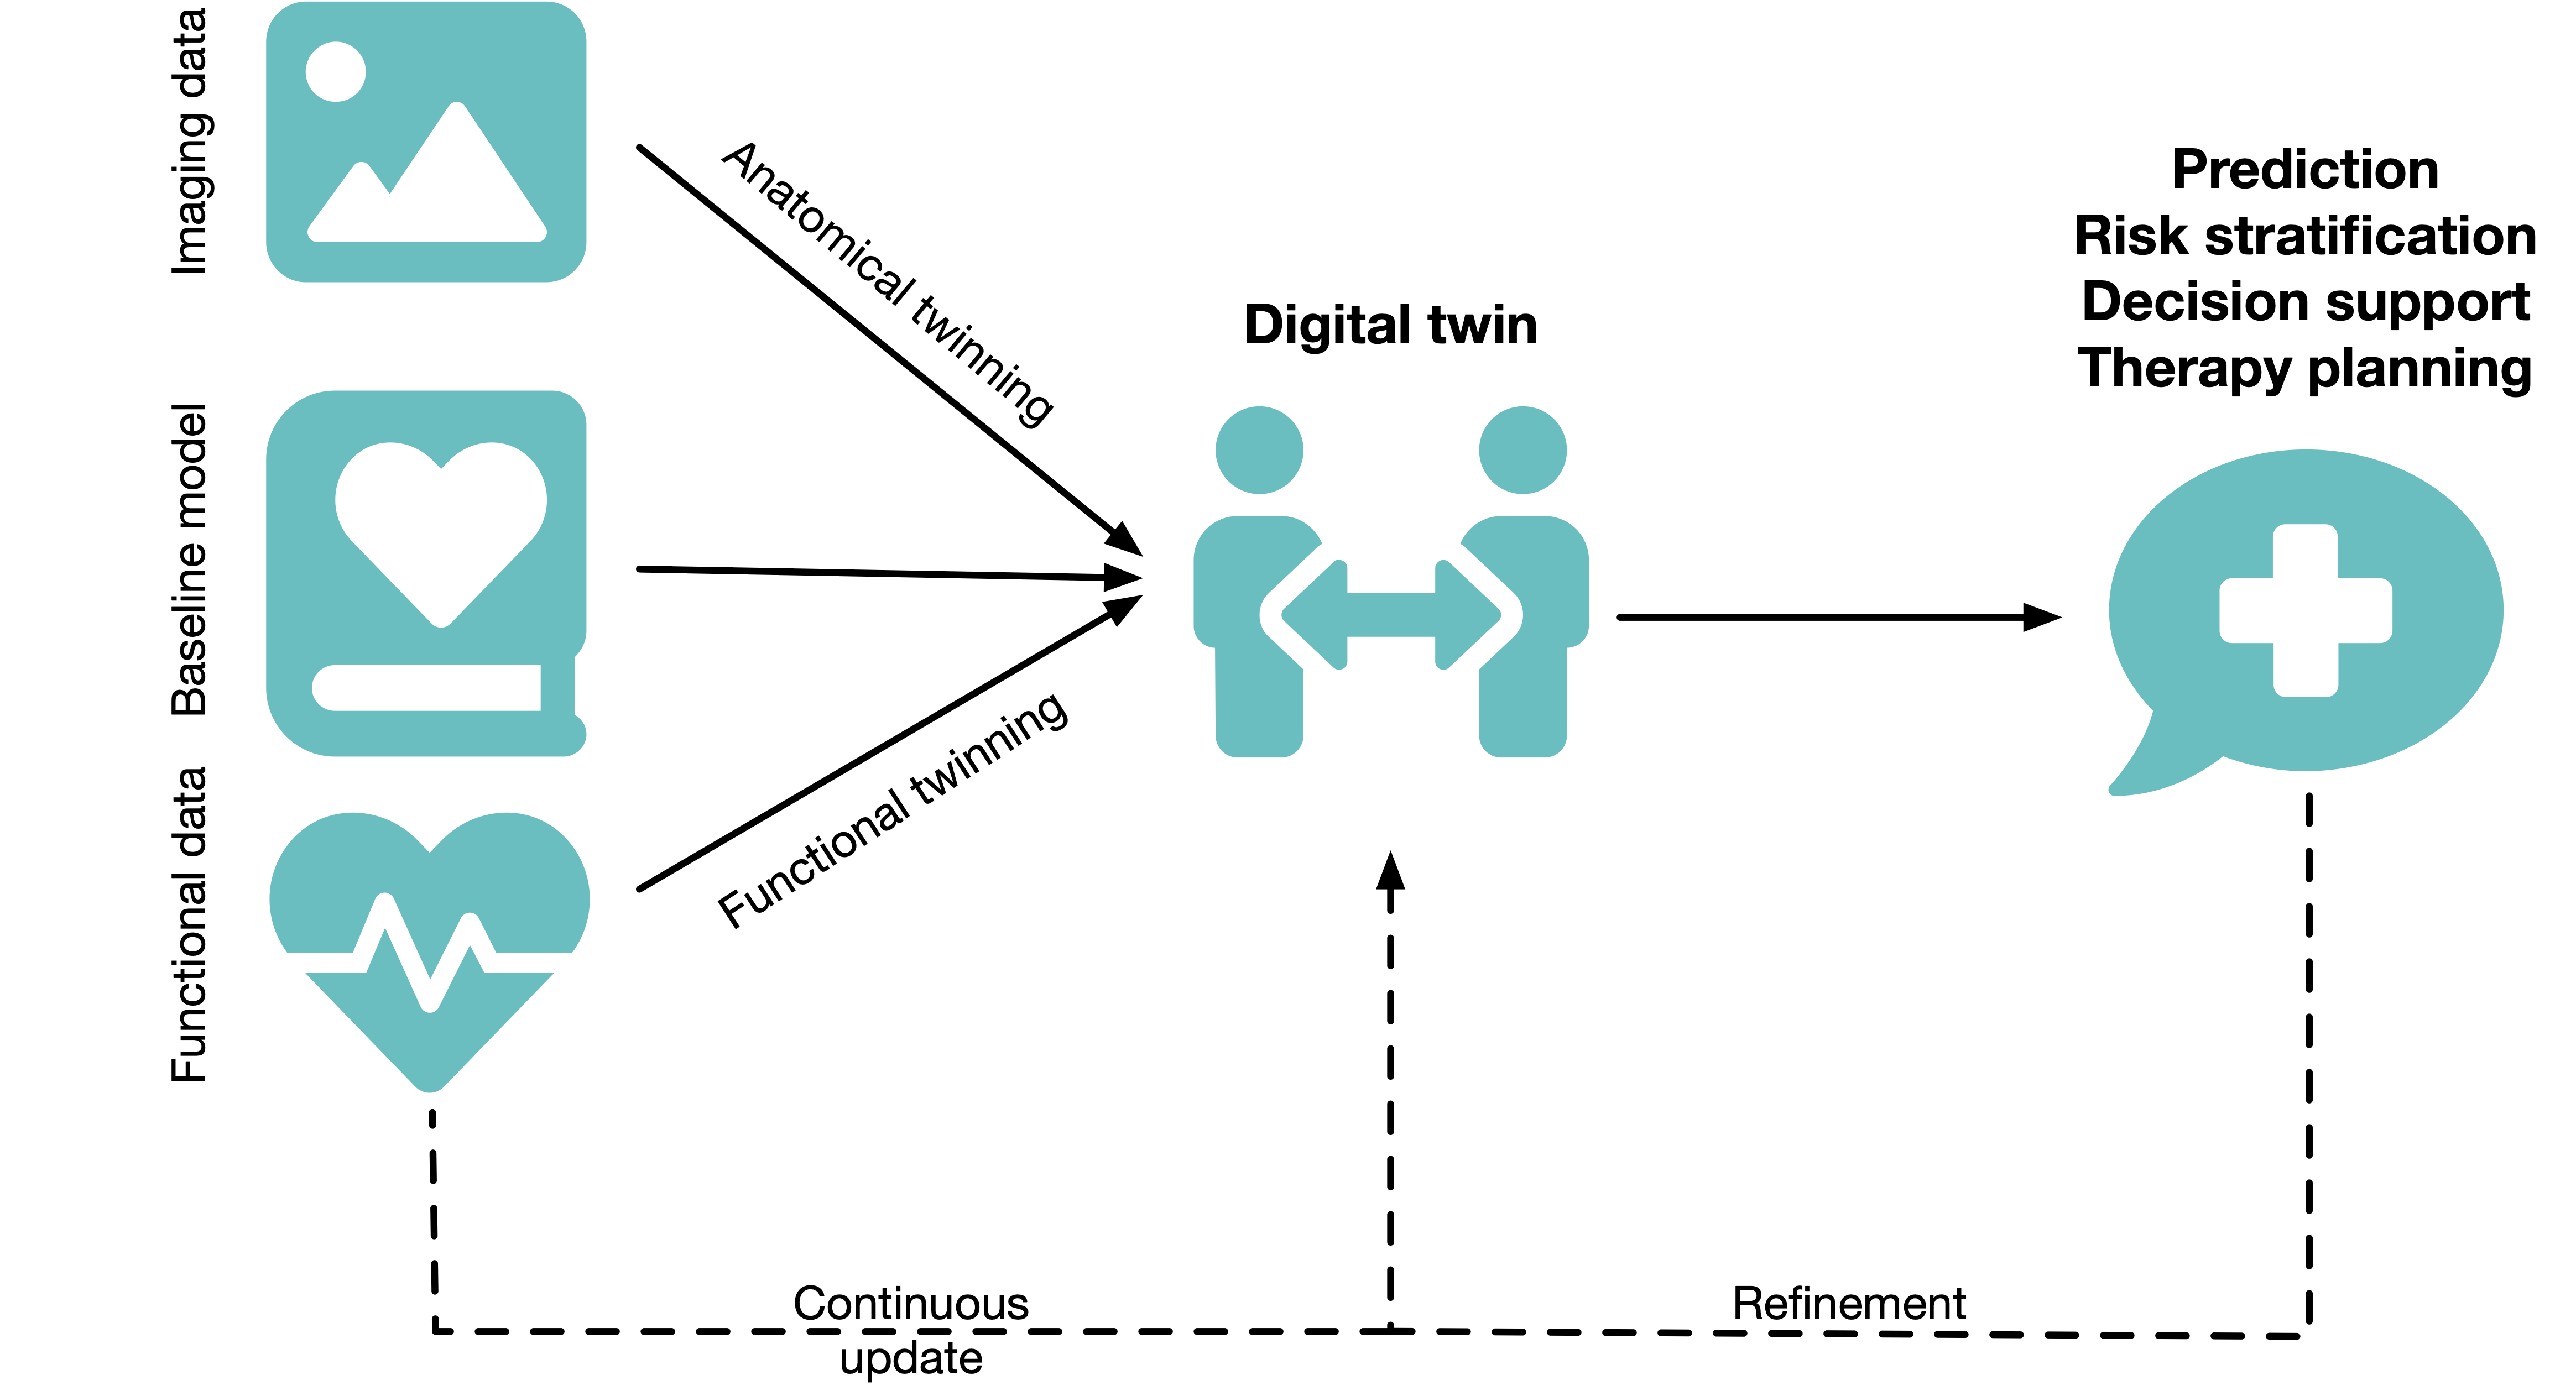 Digital Twinning